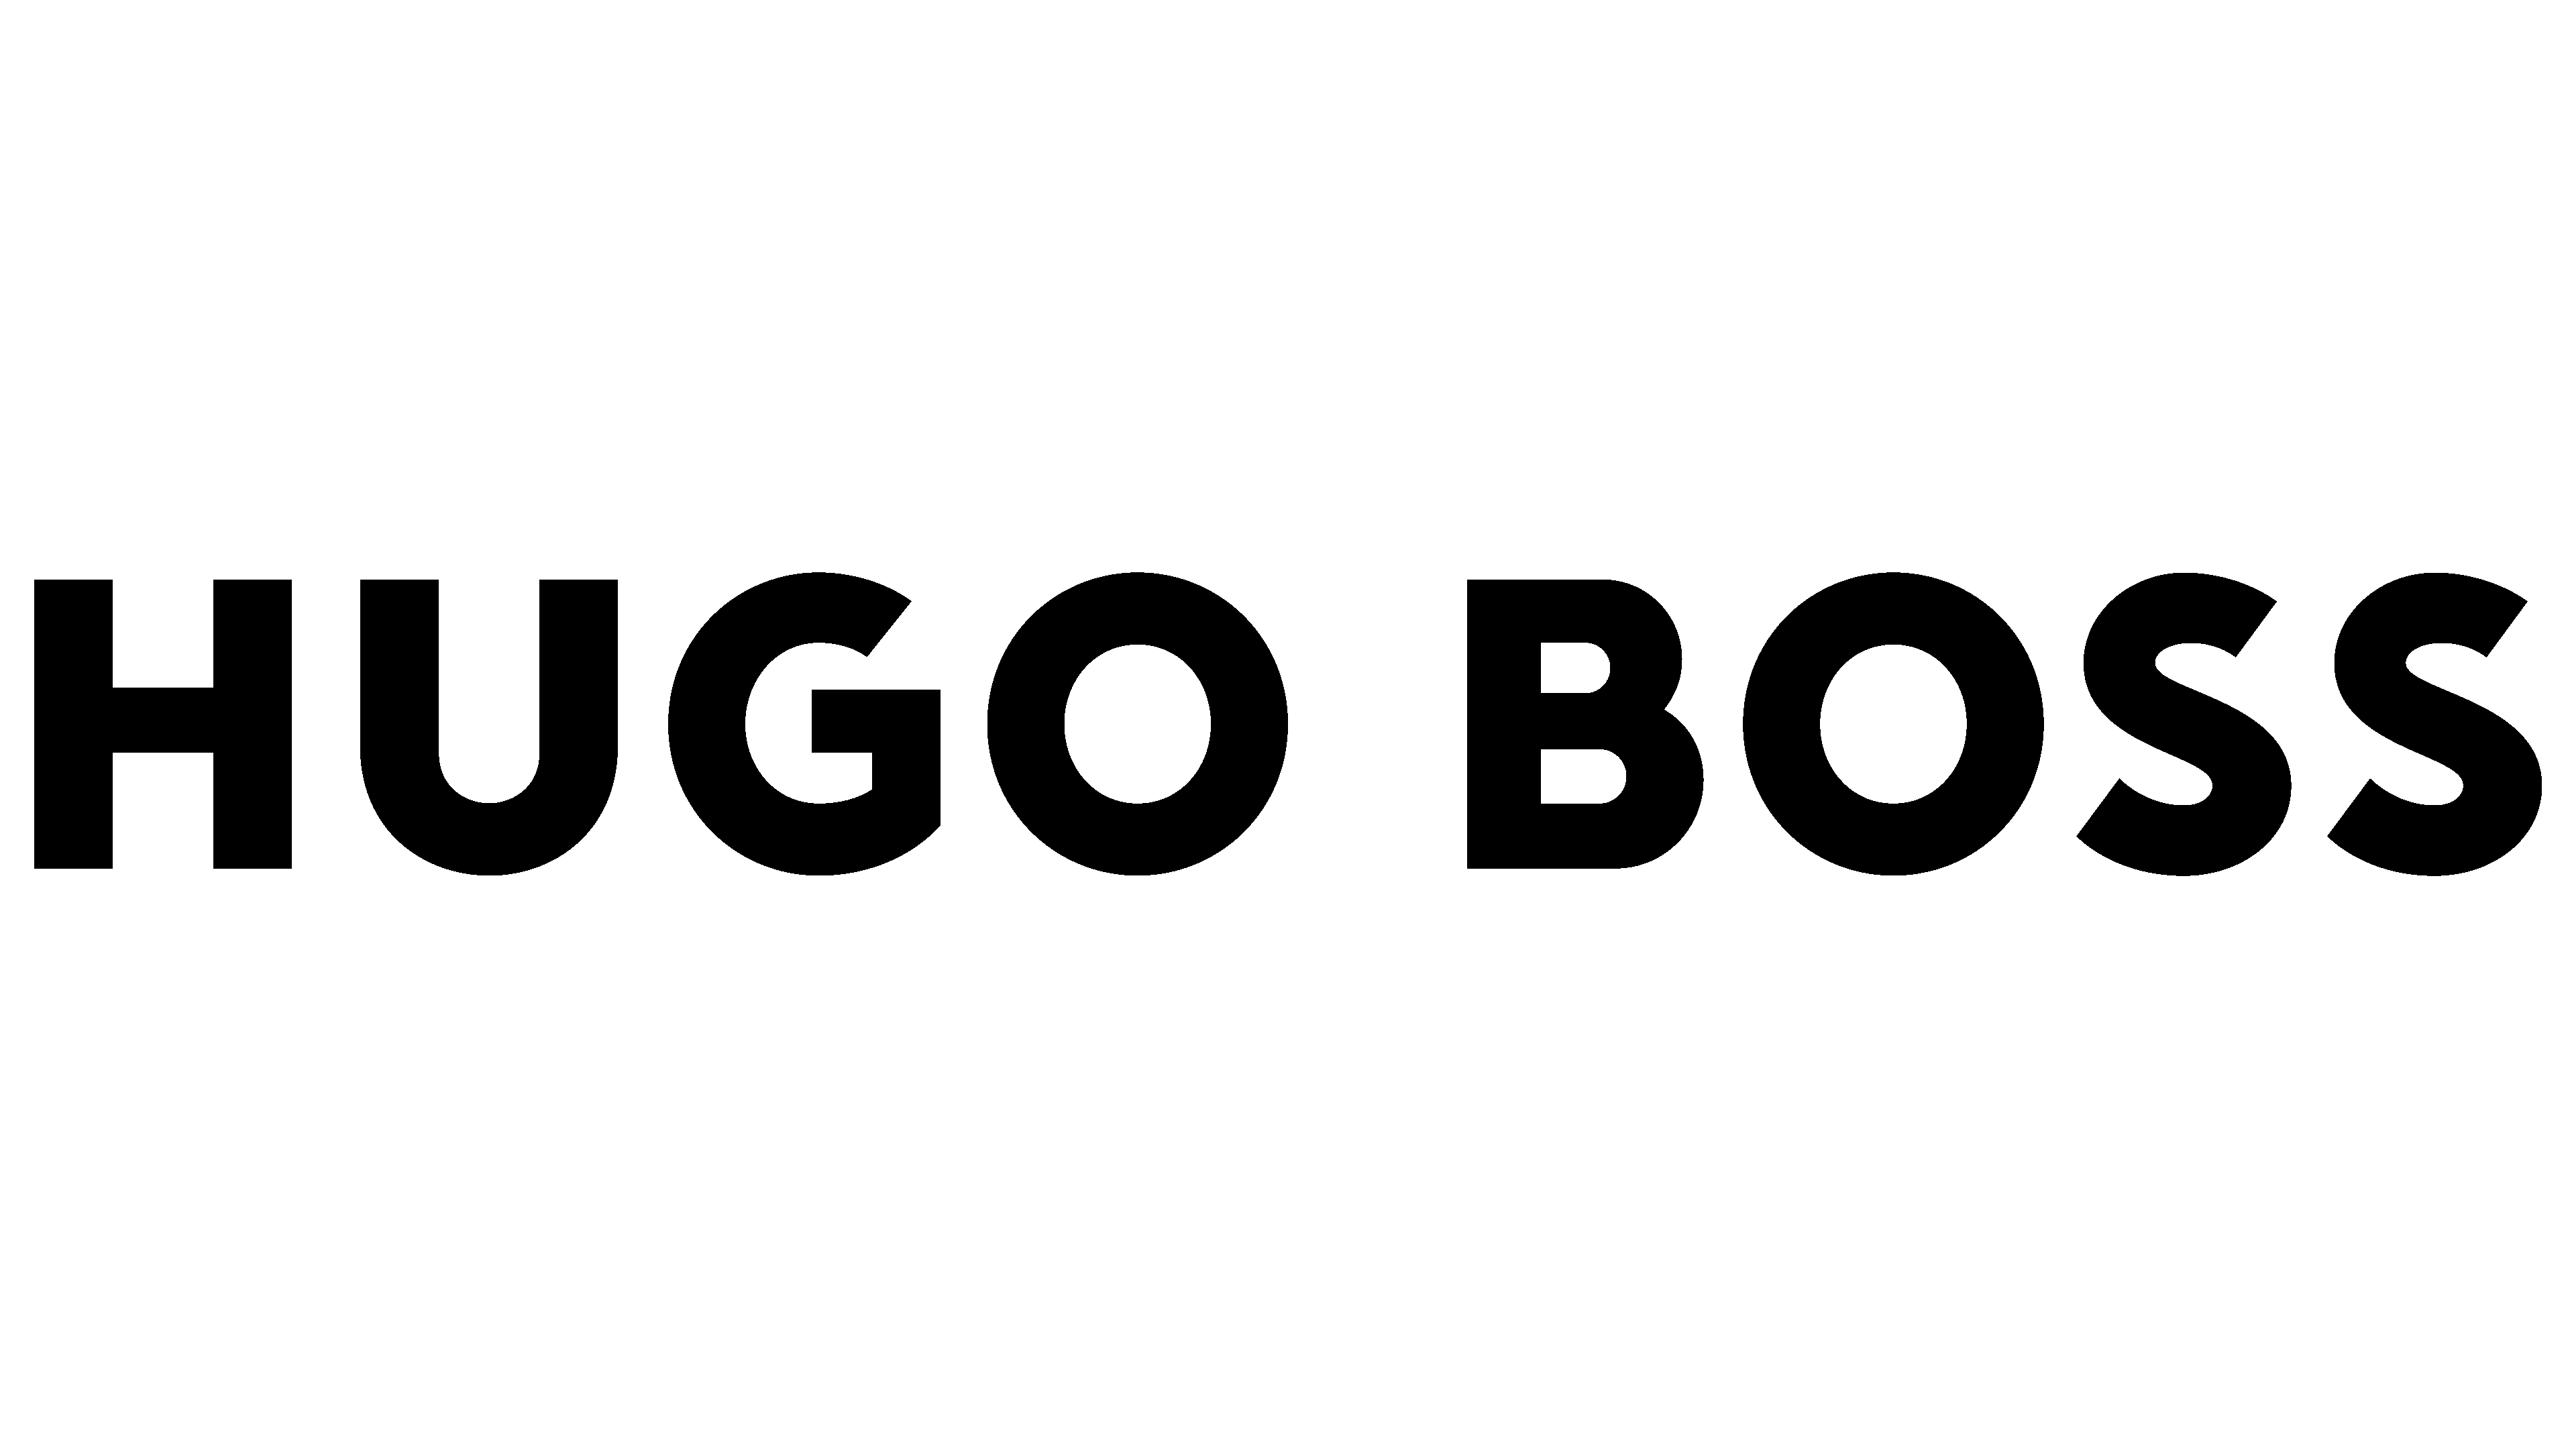 alt="a logo of Hugo boss a luxury fashion brand"